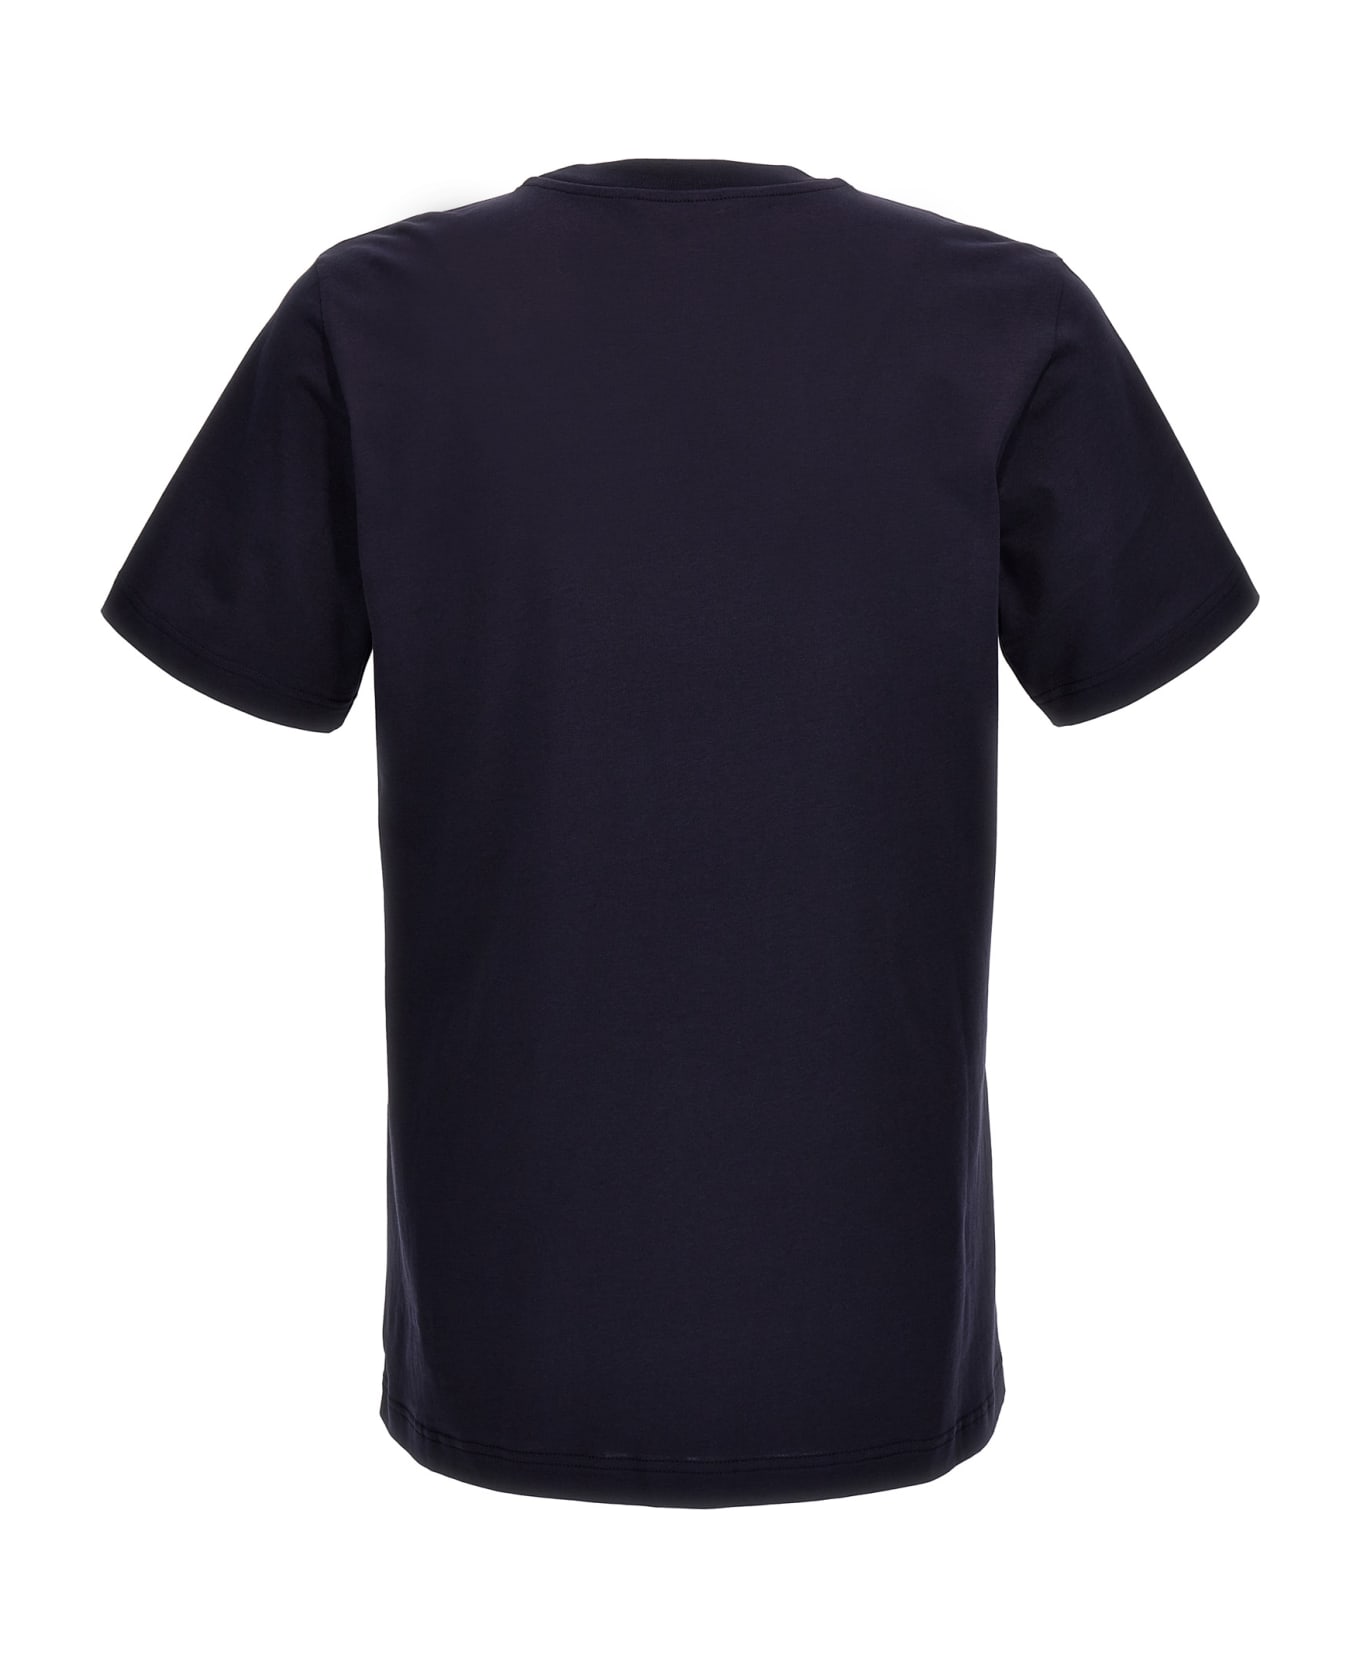 Marni Logo Embroidery T-shirt - Blue